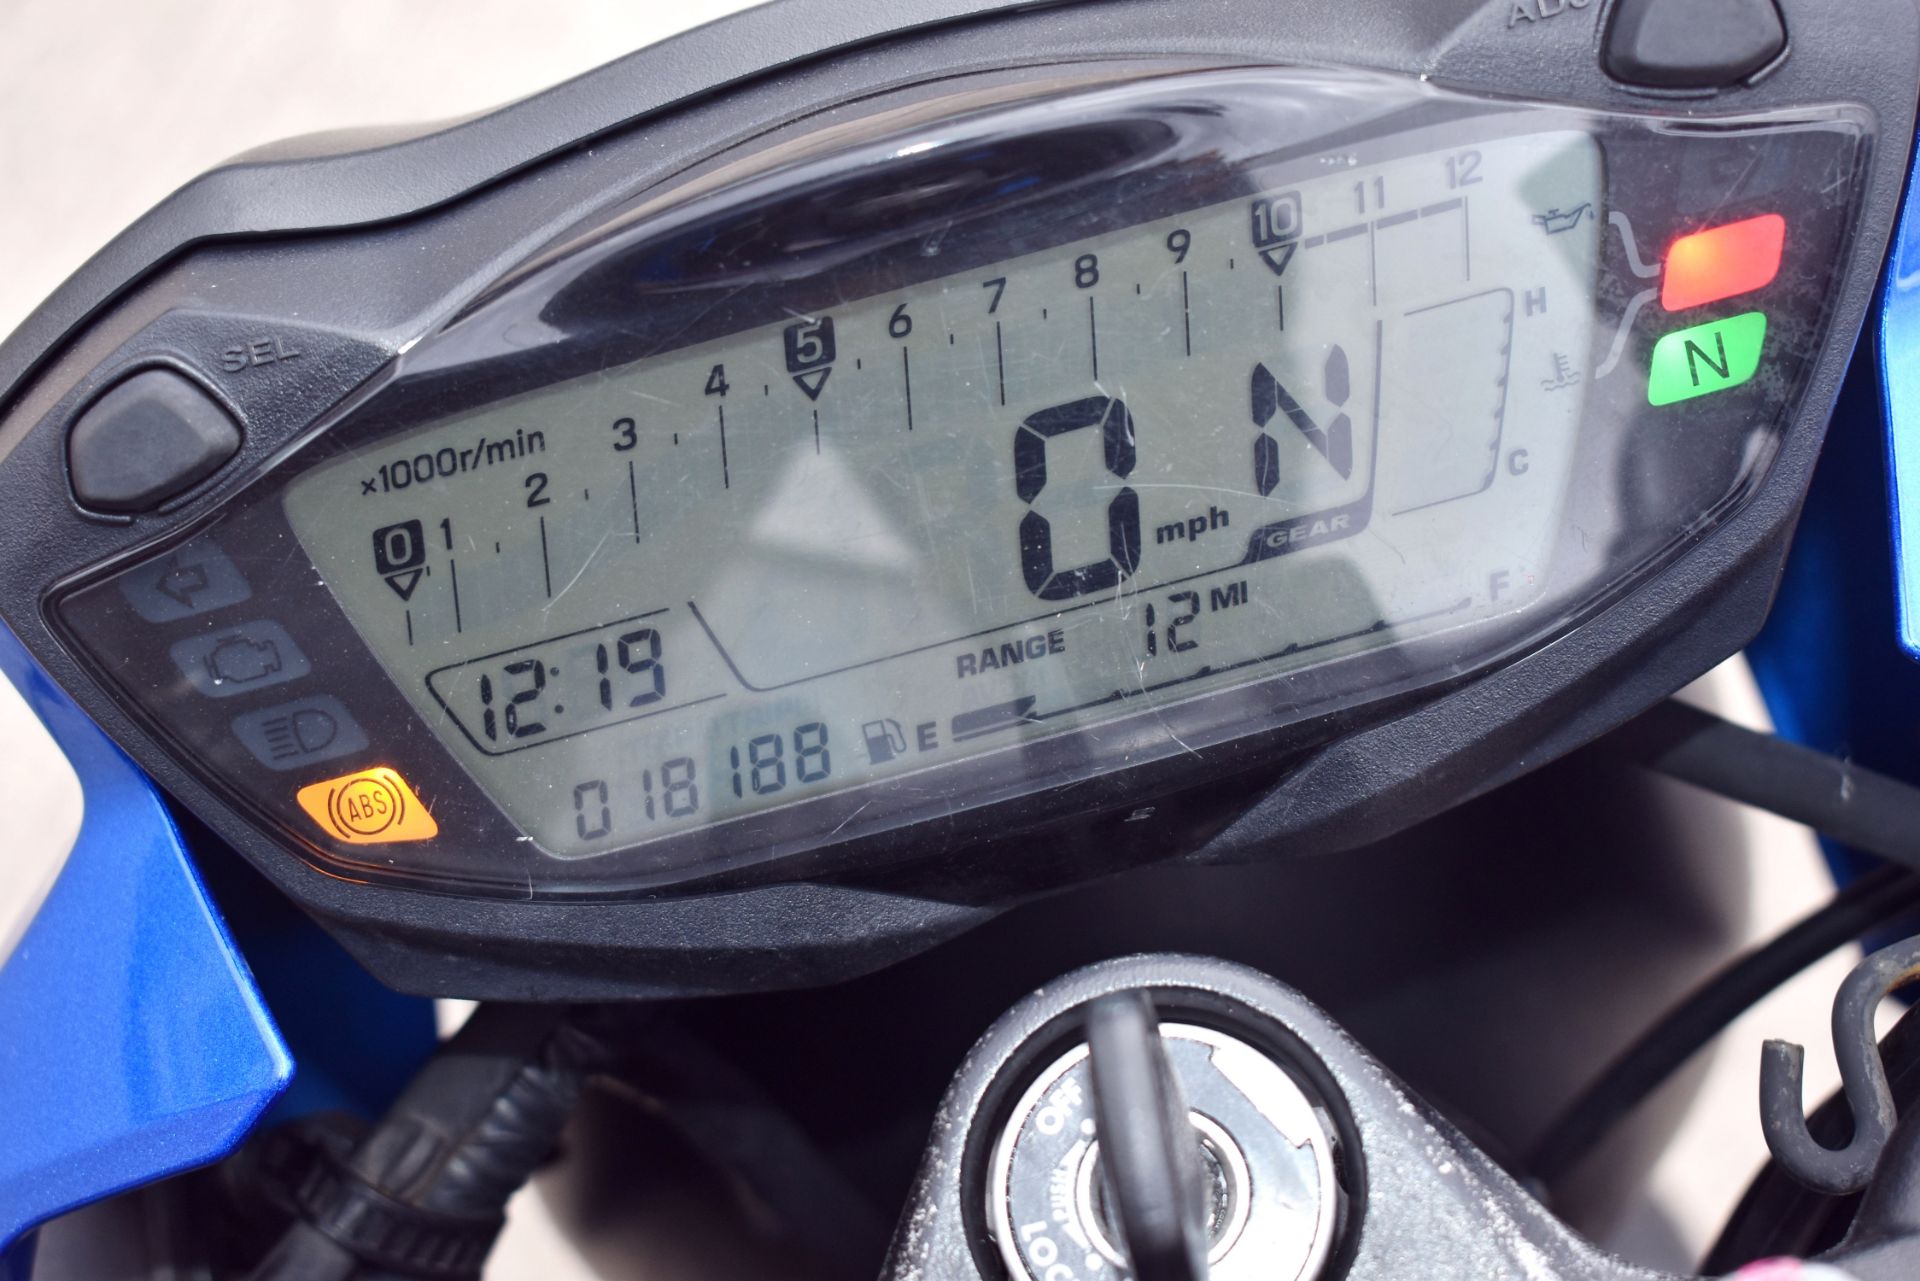 2018 Suzuki SV650 Motorcycle - BA18 UFV - Mileage: 18,188 - Image 25 of 25